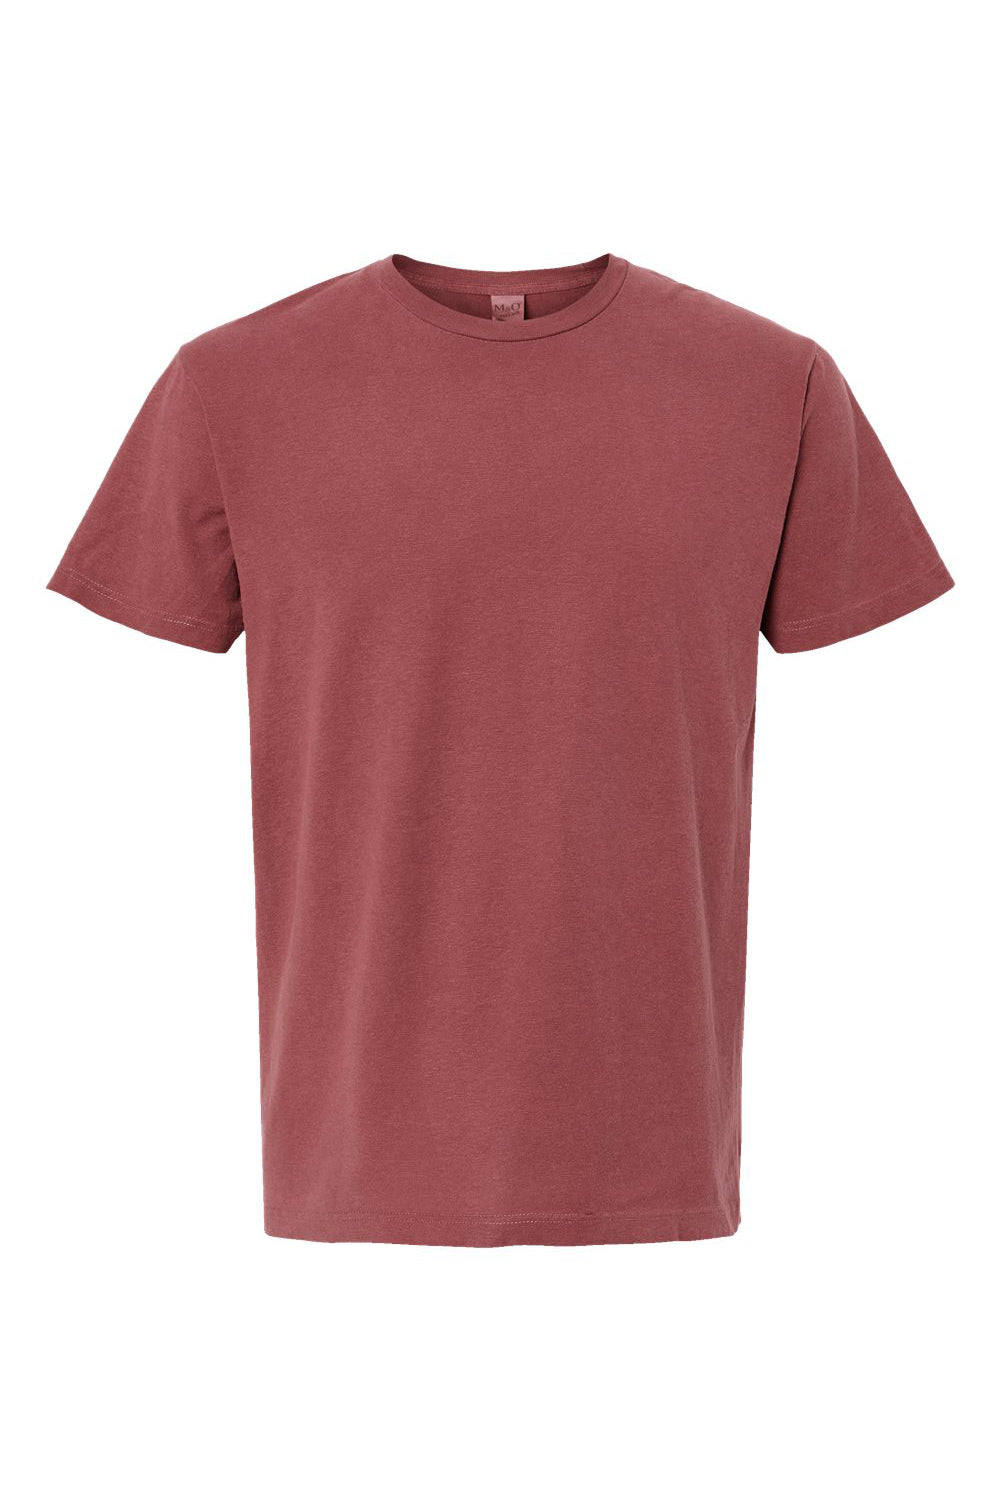 M&O 6500M Mens Vintage Garment Dyed Short Sleeve Crewneck T-Shirt Brick Red Flat Front